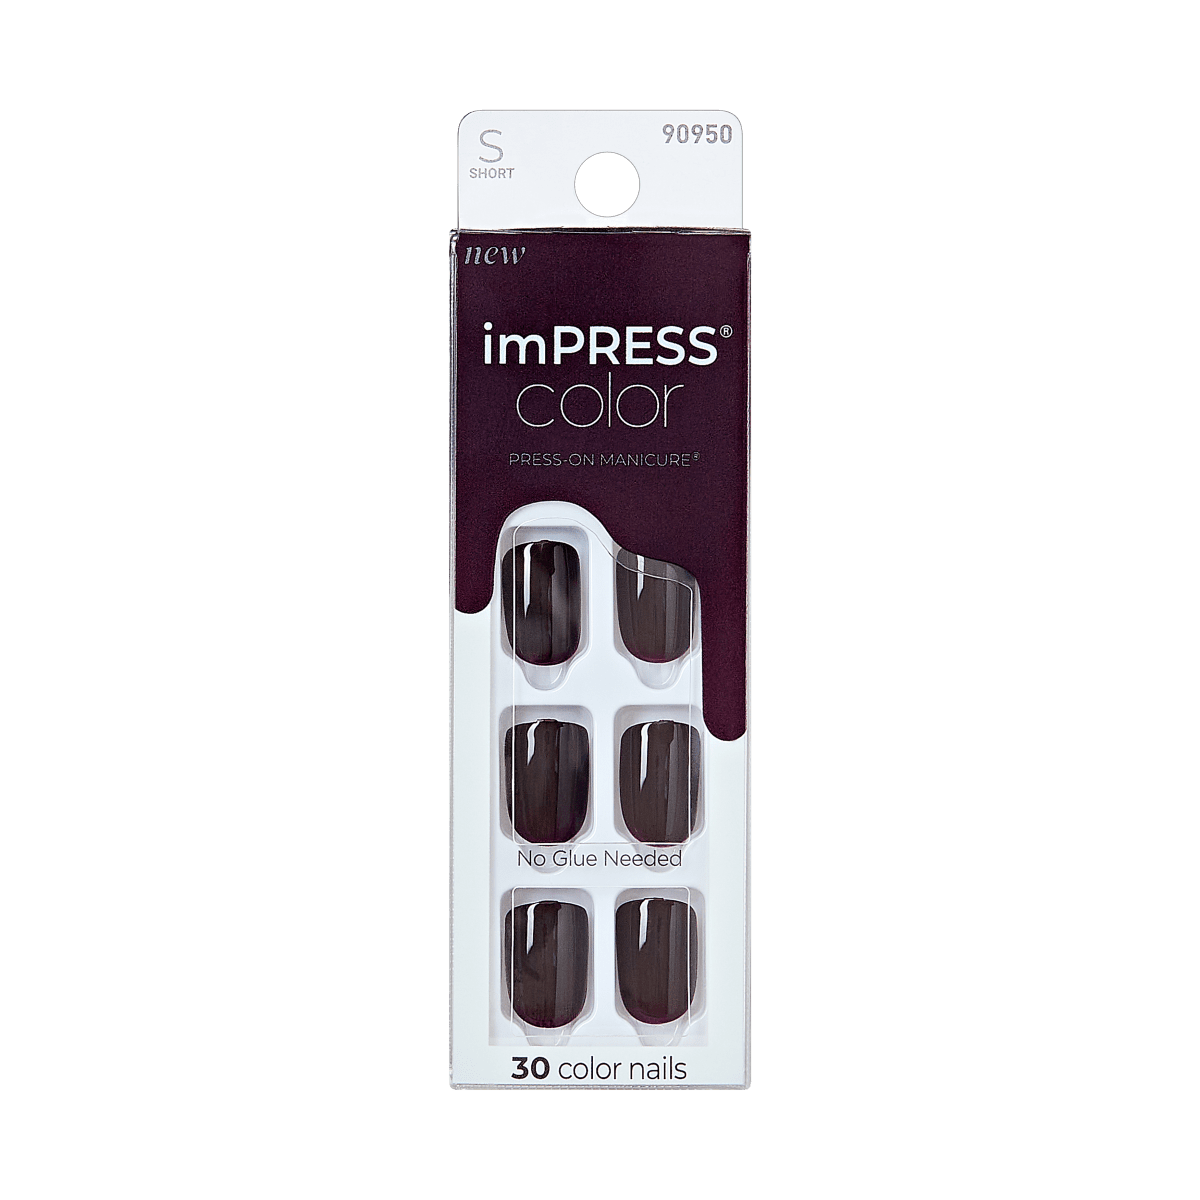 imPRESS Color Press-On Nails - Cosmic